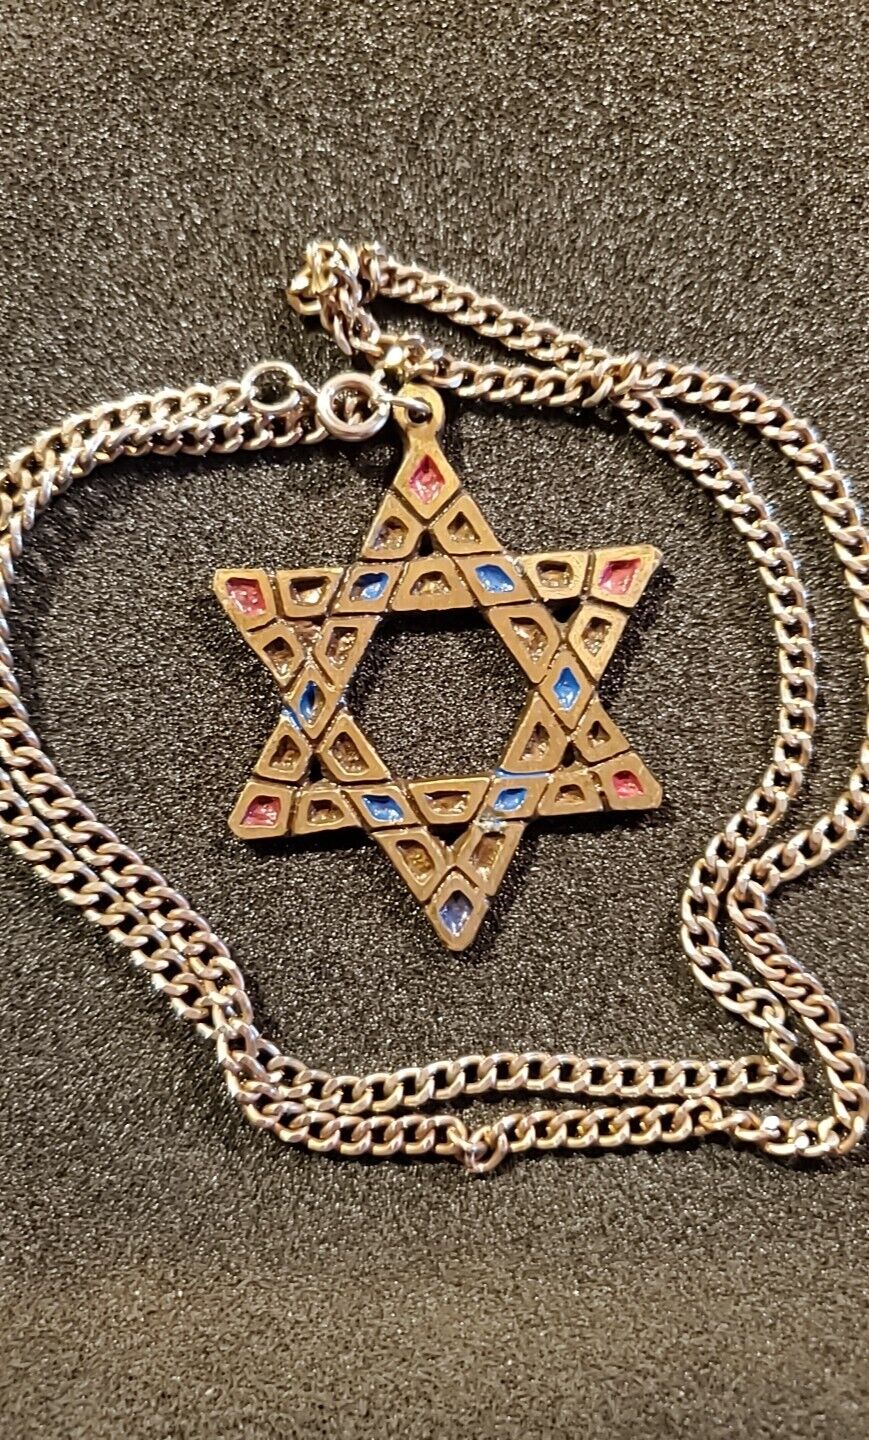 VINTAGE ISRAELI METALWARE ISRAEL METAL JEWISH STAR OF DAVID NECKLACE PENDANT 70s